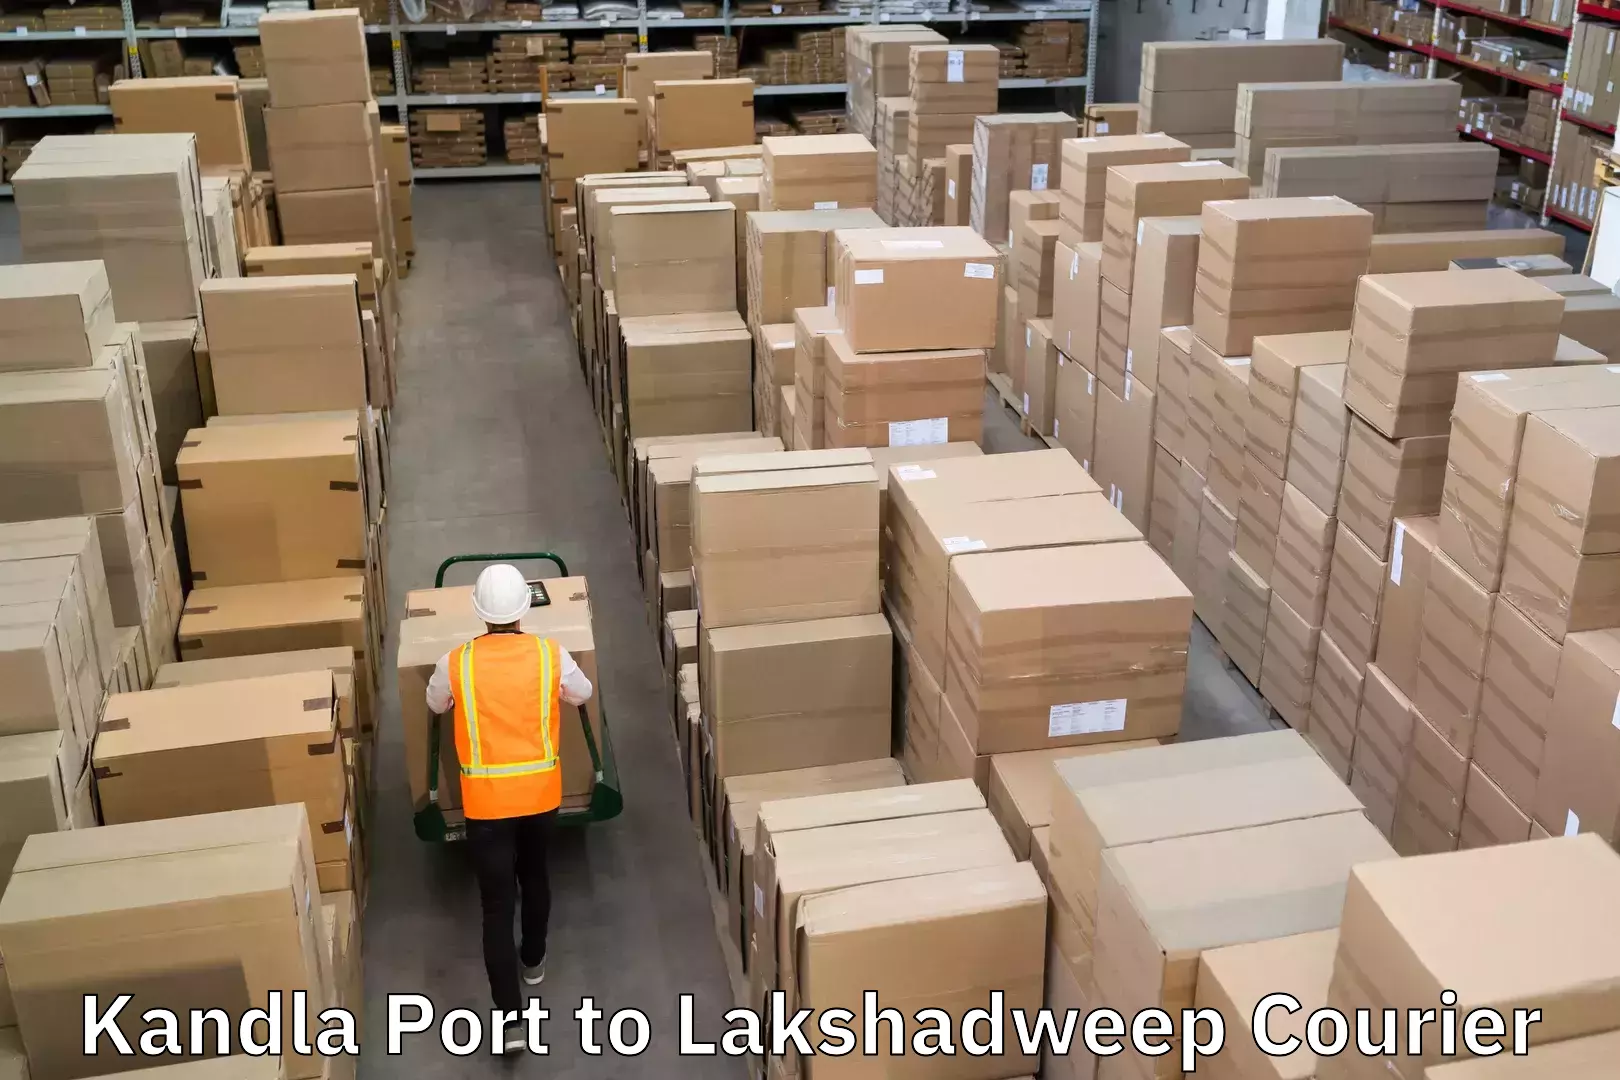 Multi-city courier Kandla Port to Lakshadweep